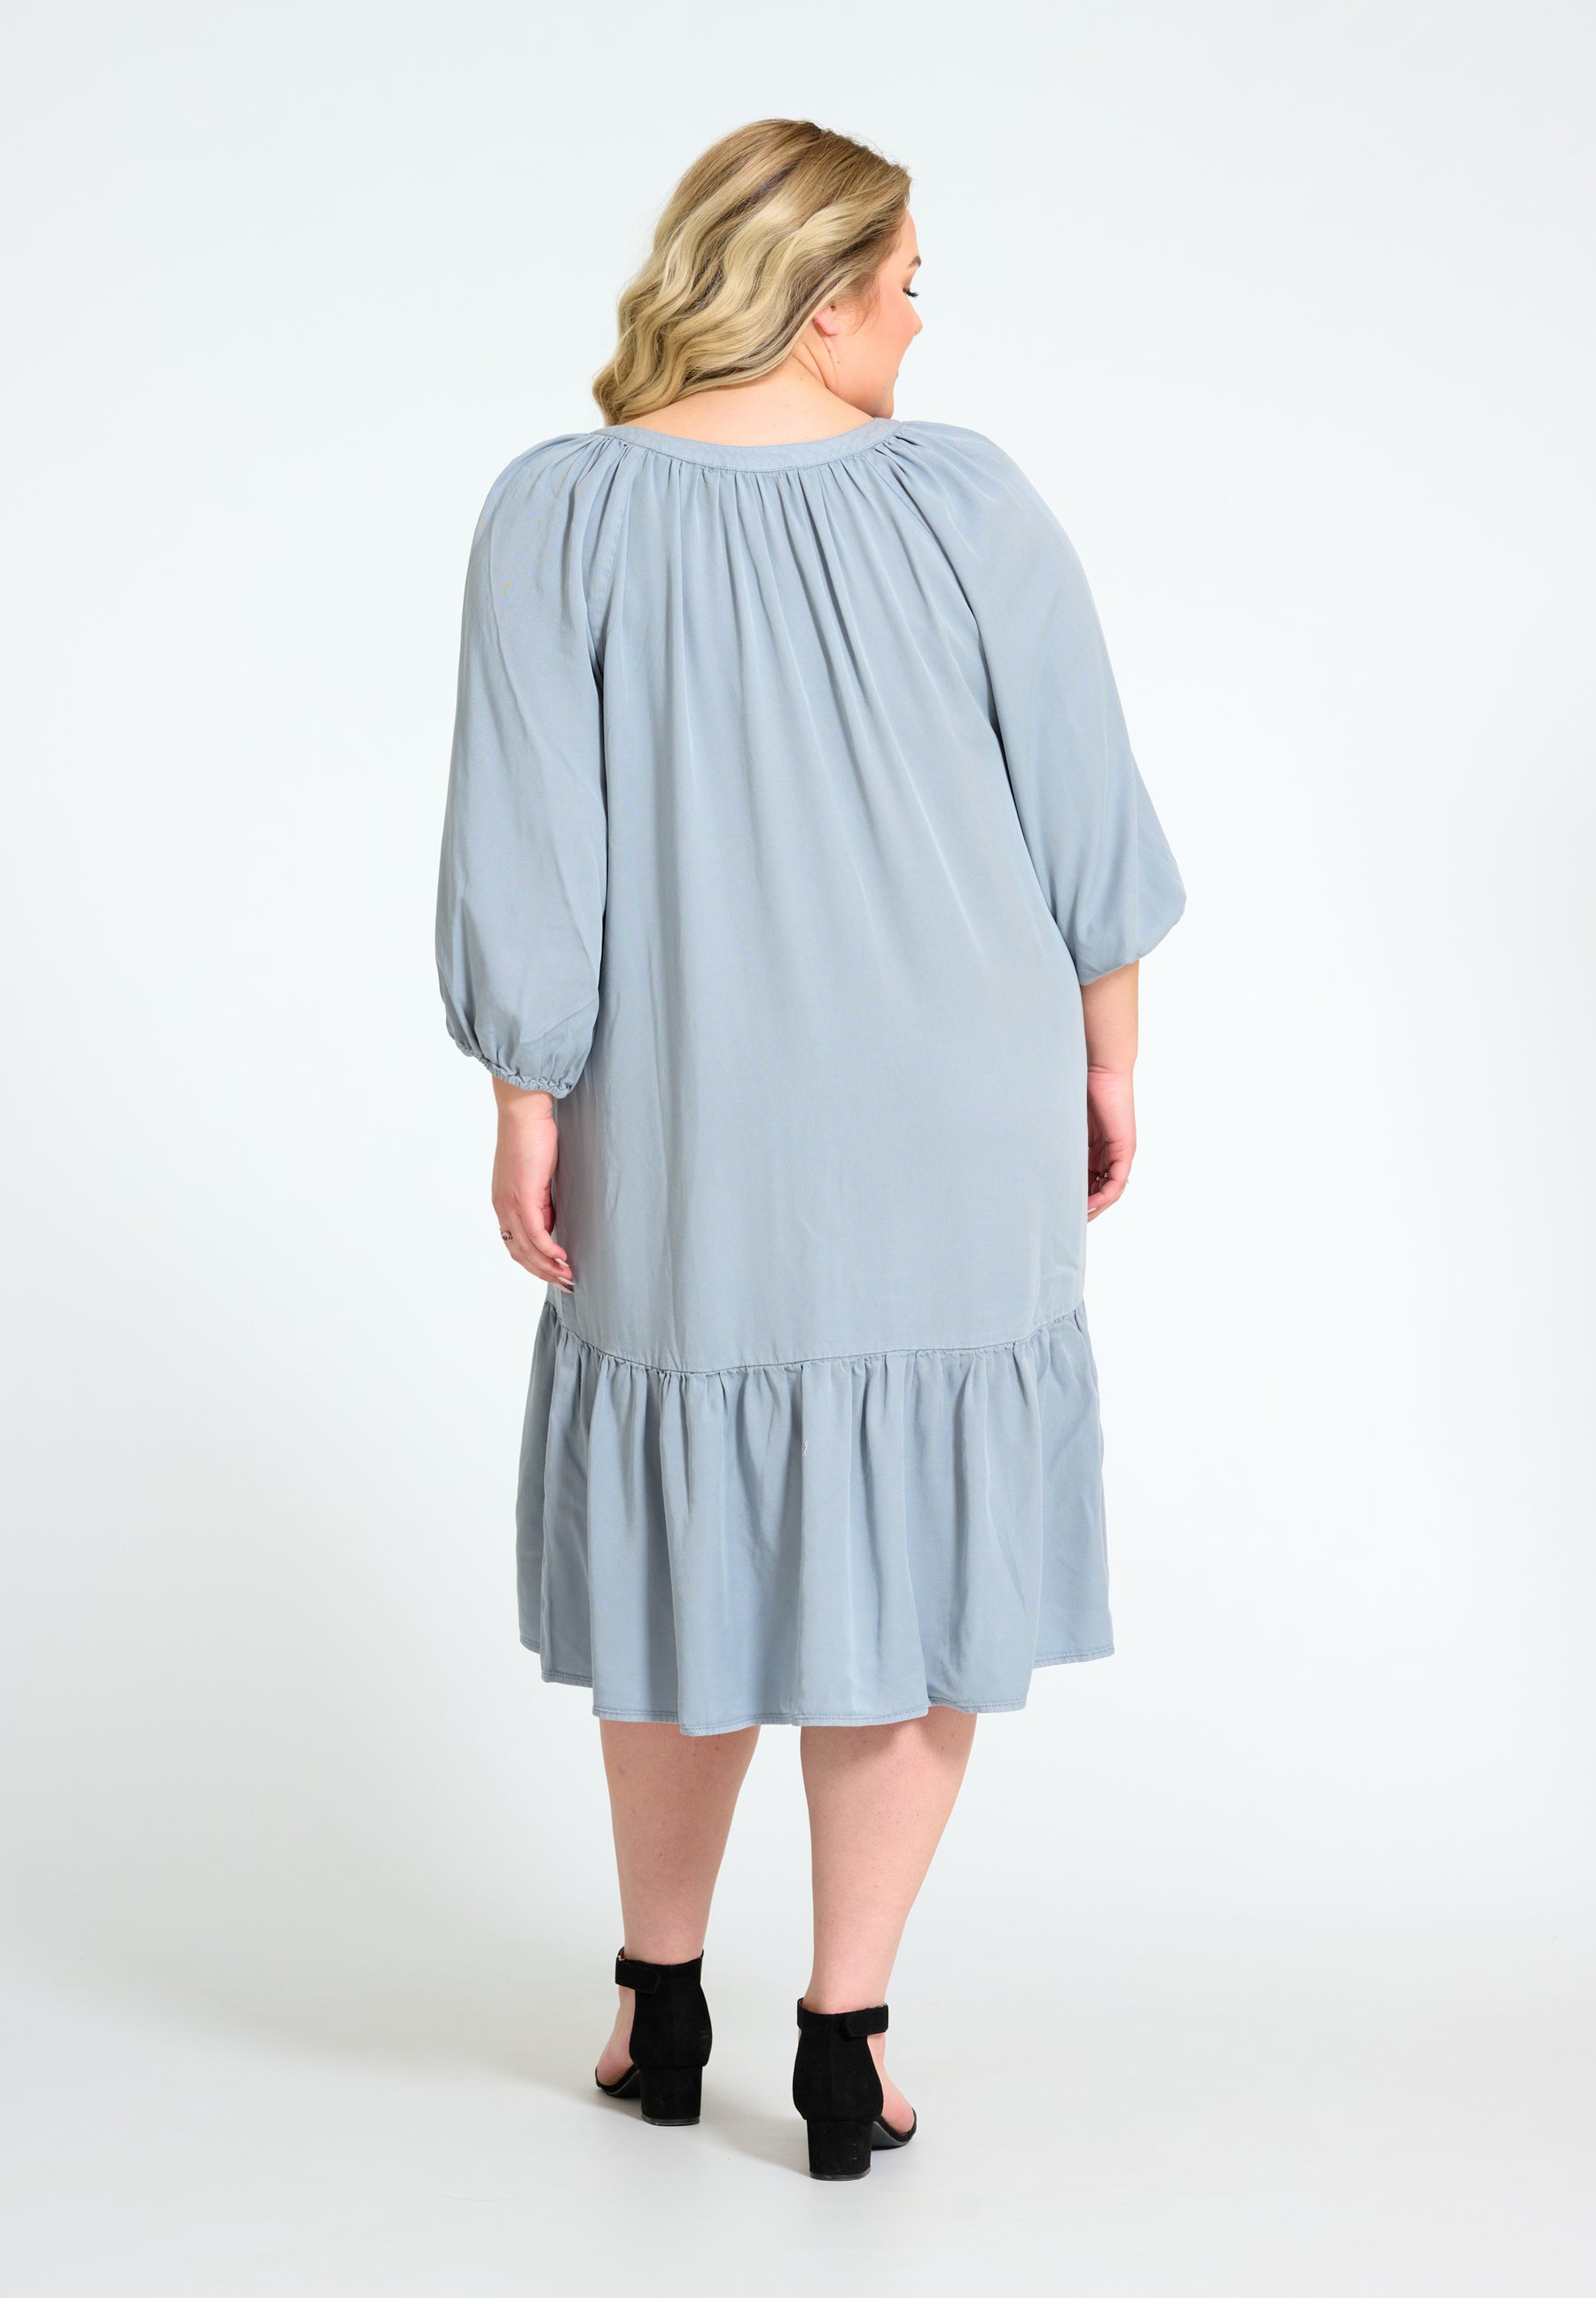 NO. 1 BY OX Midi-kjole med flæsekant Kjoler Blå